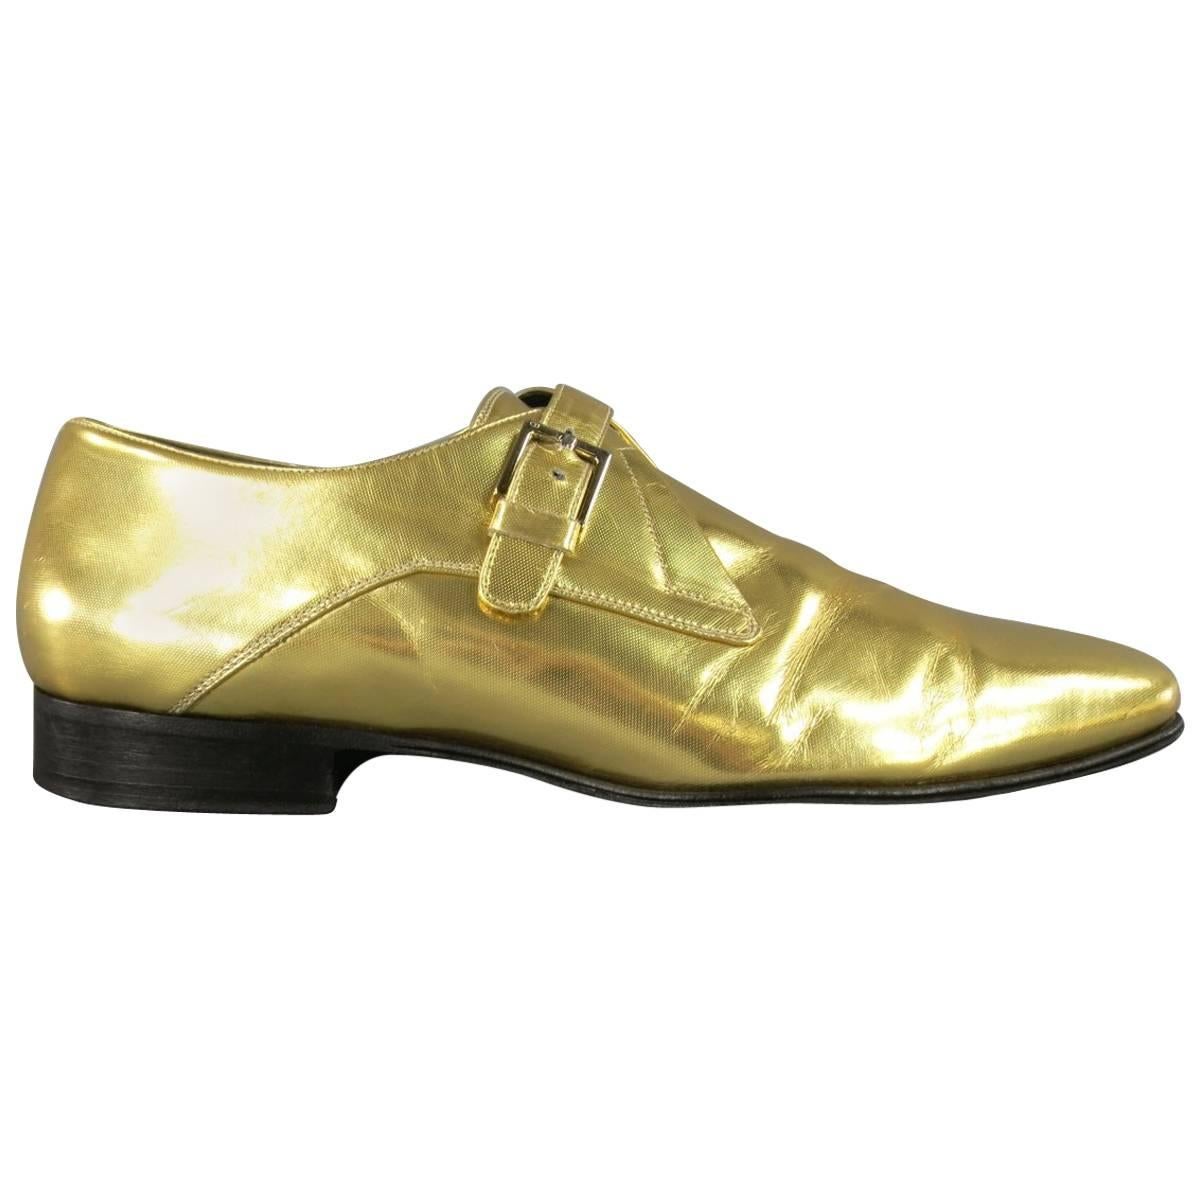 Men's DIOR HOMME Hedi Slimane Size 7.5 Metallic Gold Leather Monk Strap Loafers